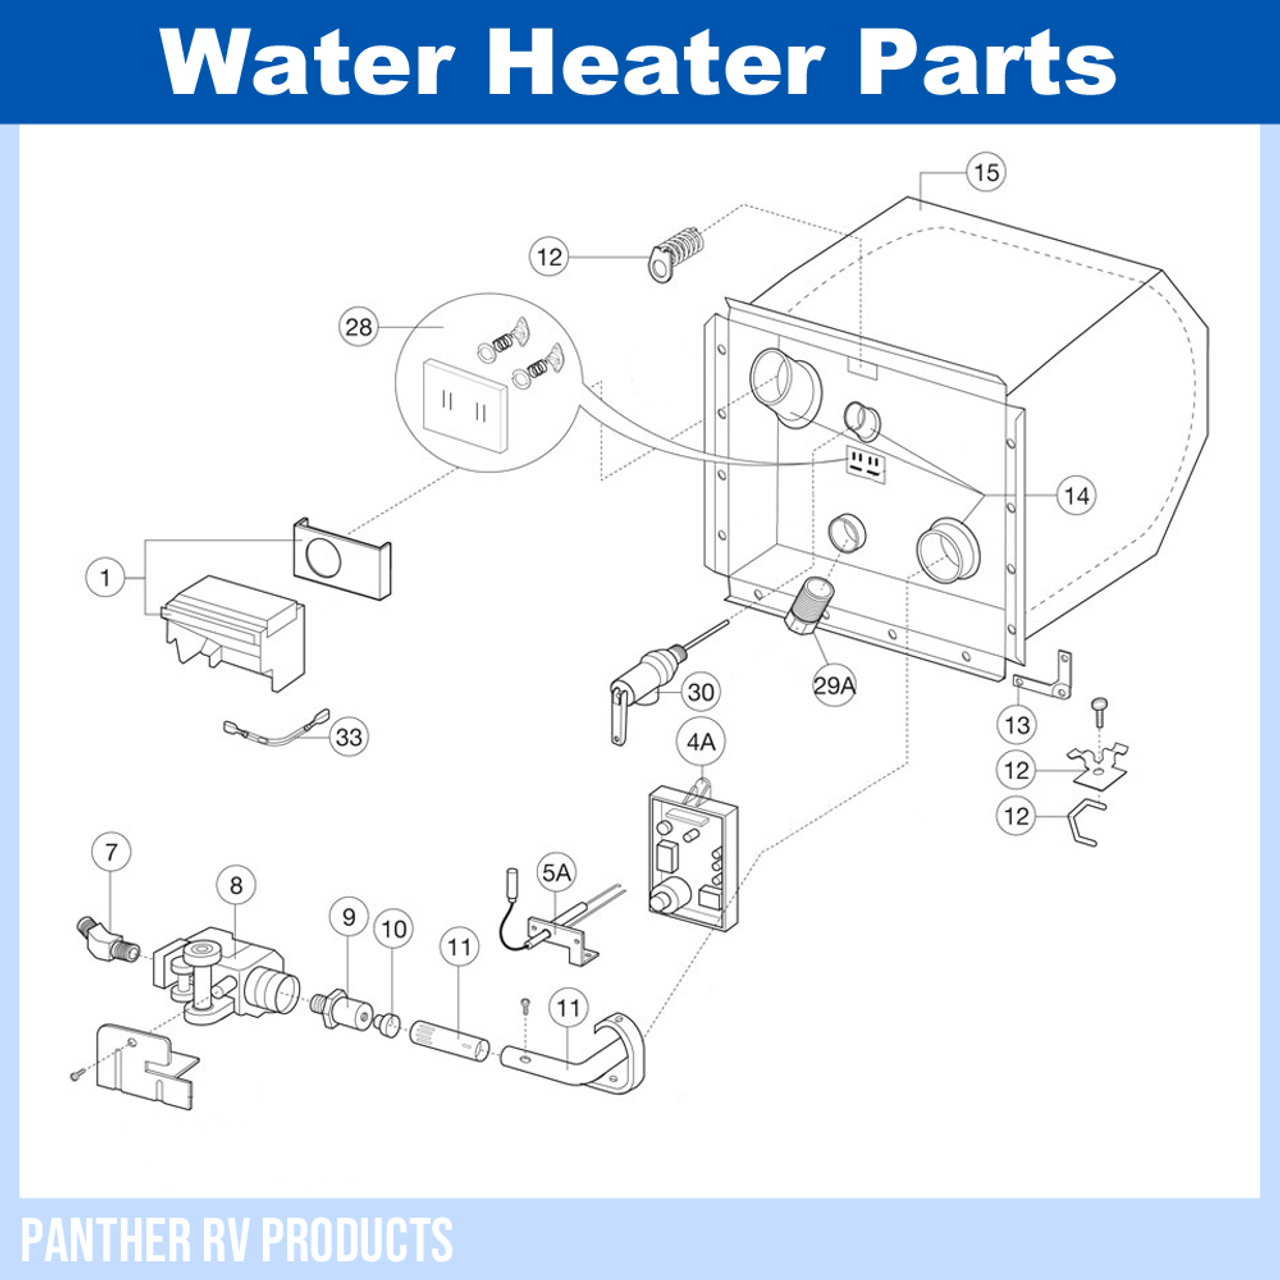 Atwood Water Heater Repair Youtube